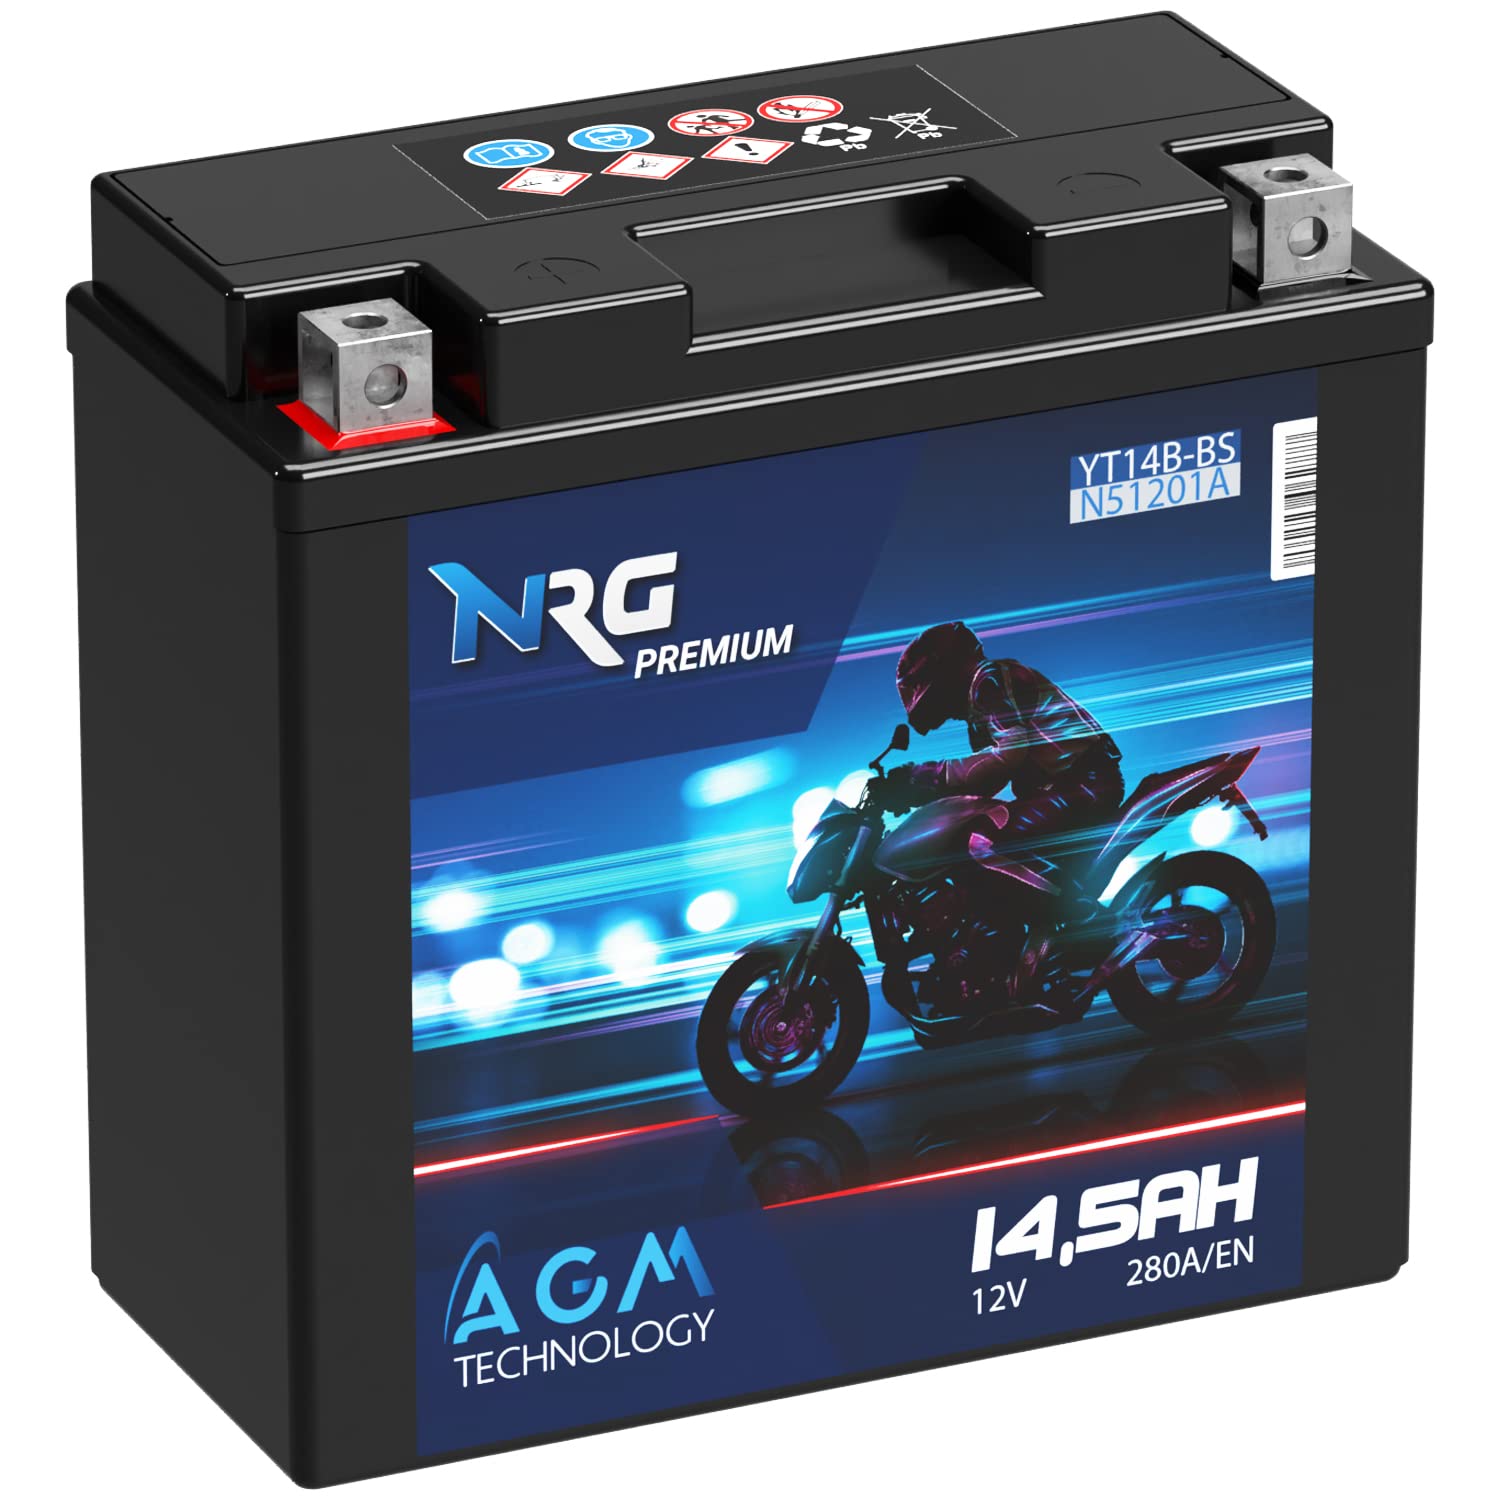 NRG Premium YT14B-4 AGM Motorradbatterie 14,5Ah 12V 280A/EN Batterie 51201 51422 GT14B-4 YT14B-BS auslaufsicher wartungsfrei ersetzt 14Ah von NRG PREMIUM